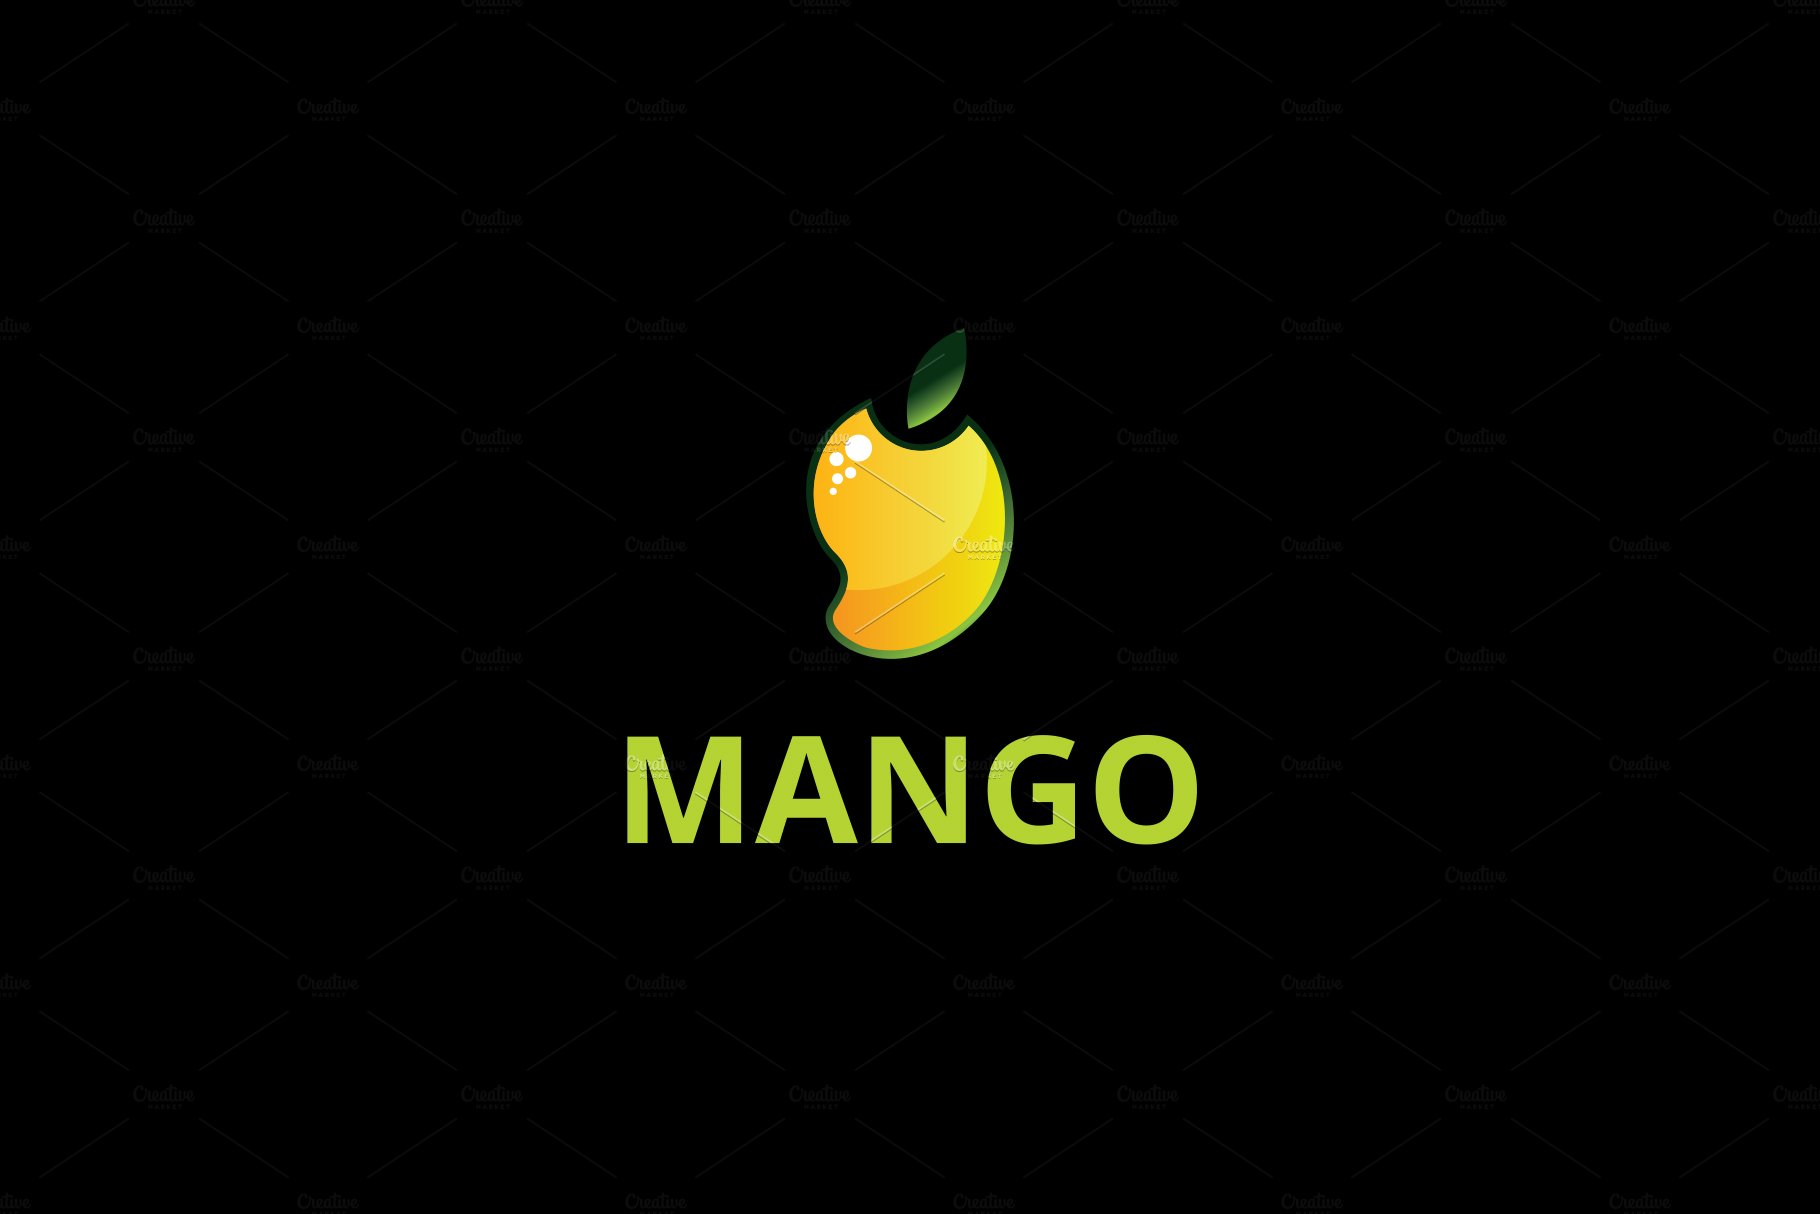 Mango Logo preview image.